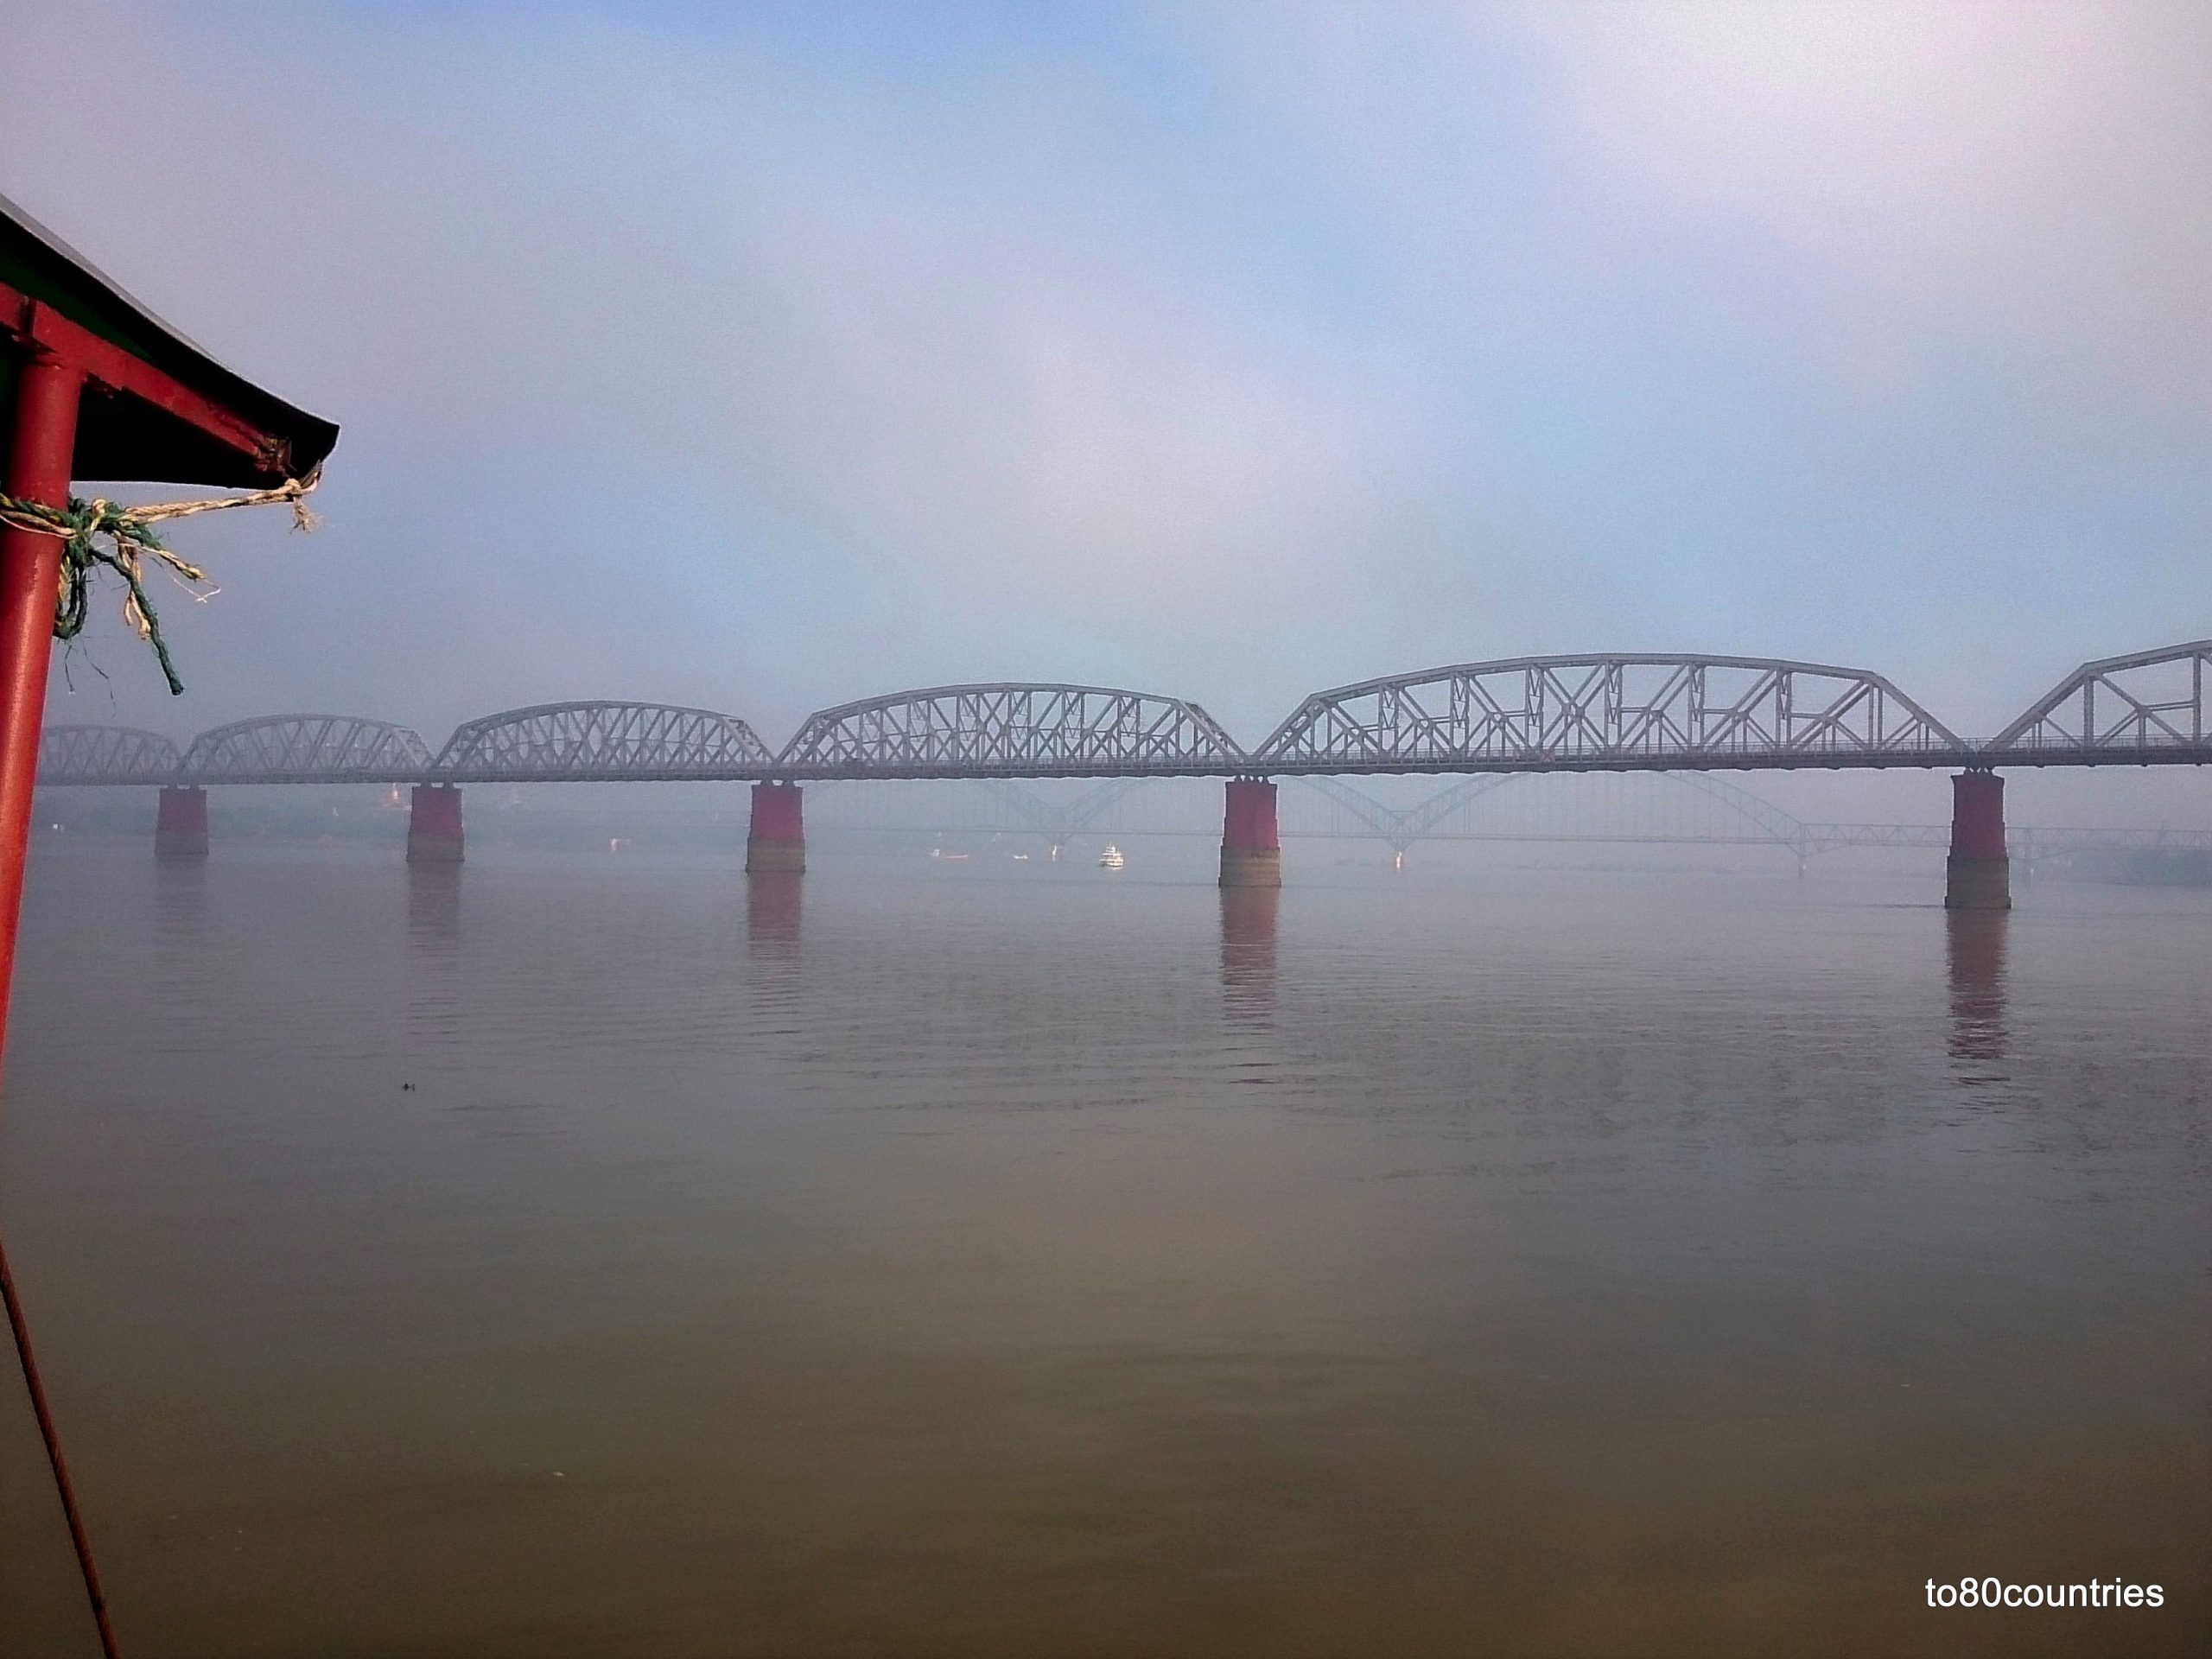 Eisenbahnbrücke über den Irrawaddy bei Sagaing